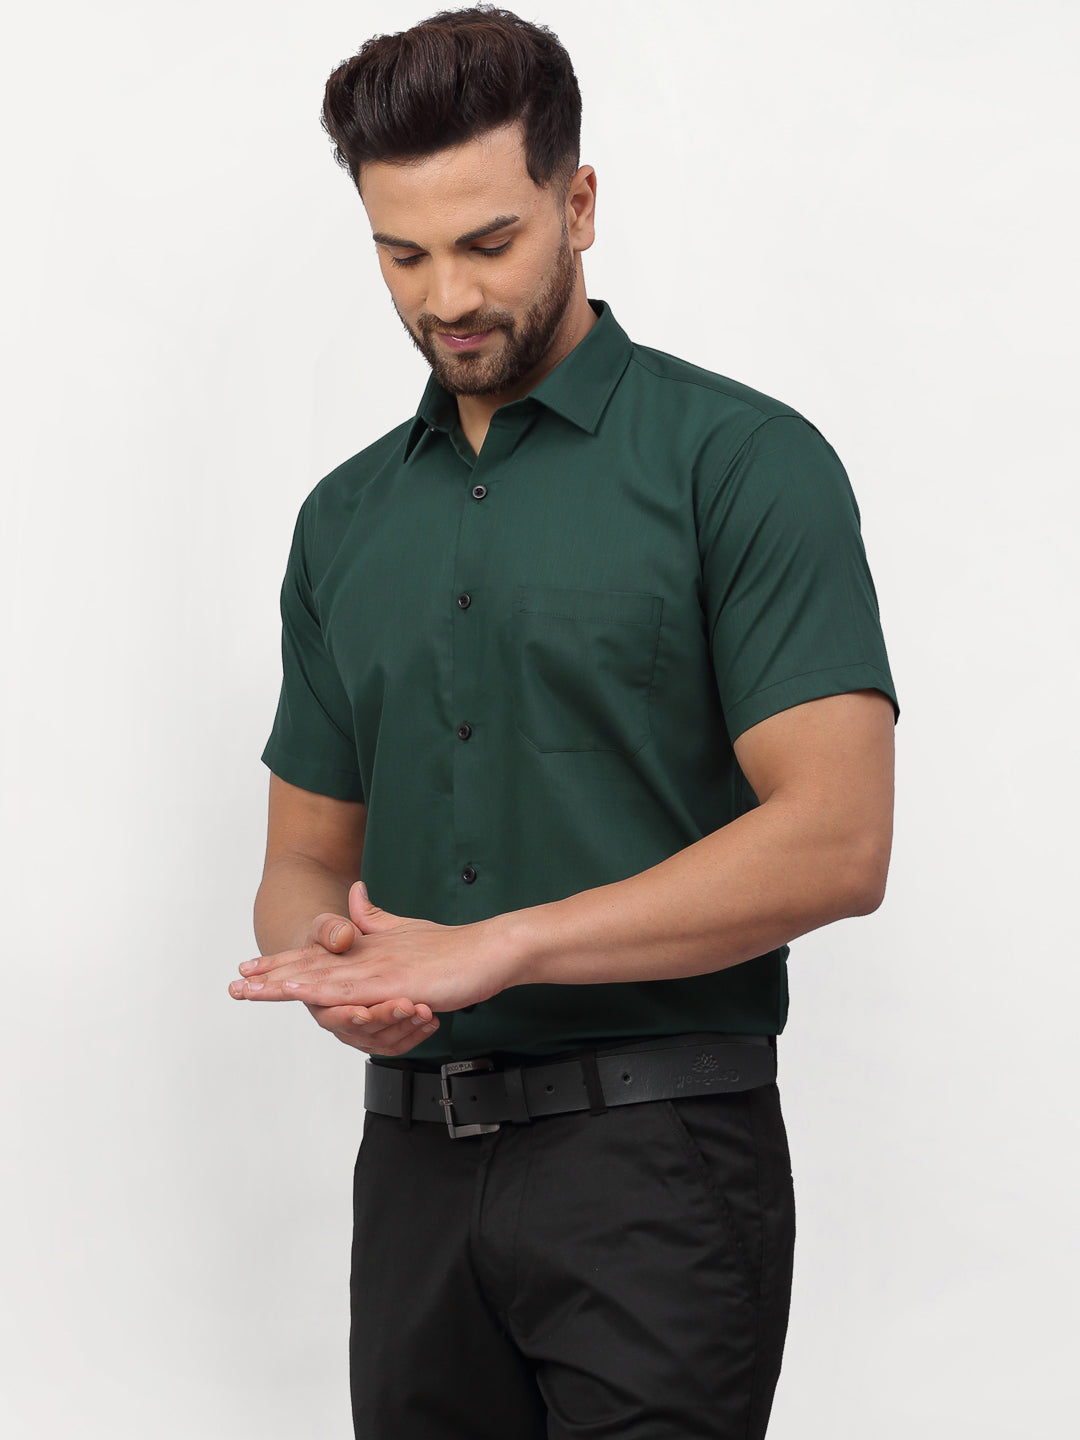 Men's Olive Cotton Half Sleeves Solid Formal Shirts ( SF 754Olive ) - Jainish